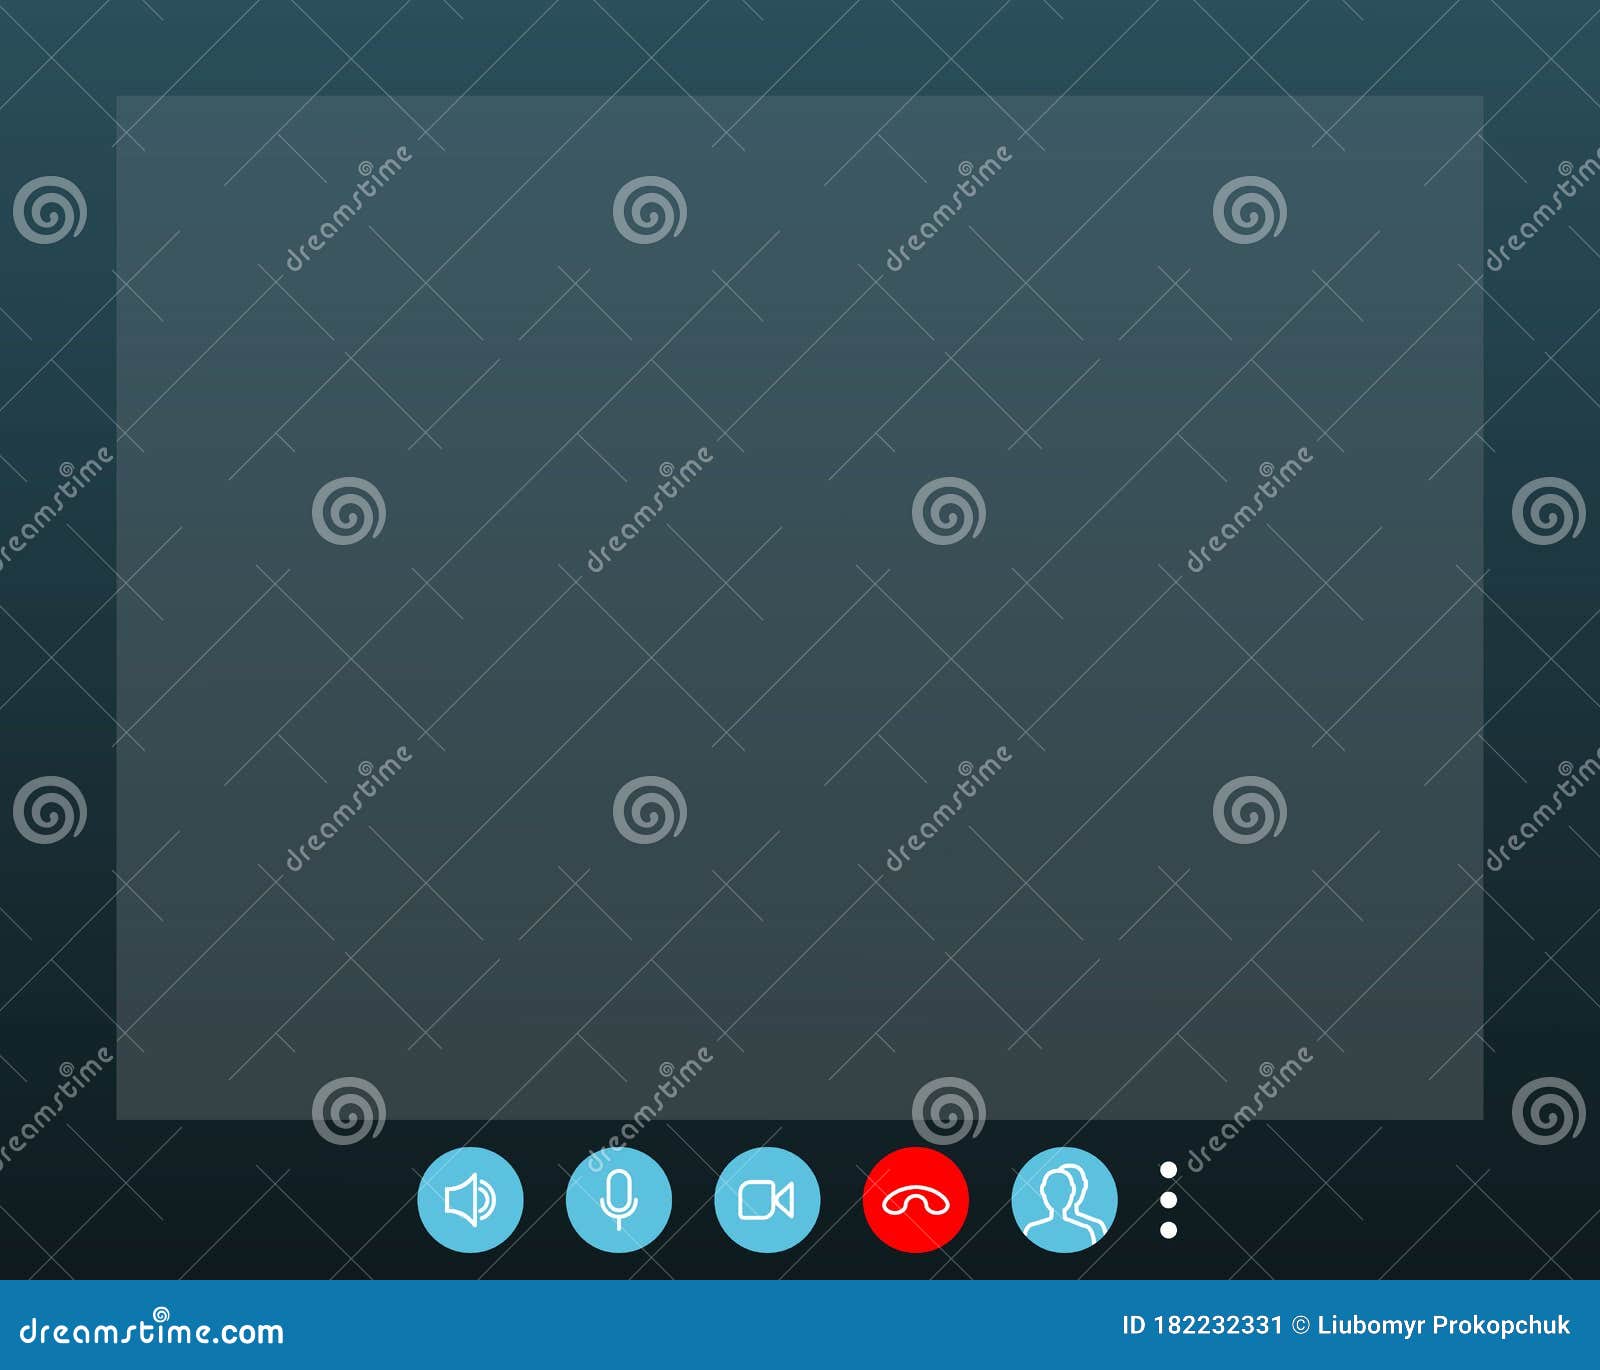 Video Call  Screen  Template Vector  Illustration Stock 